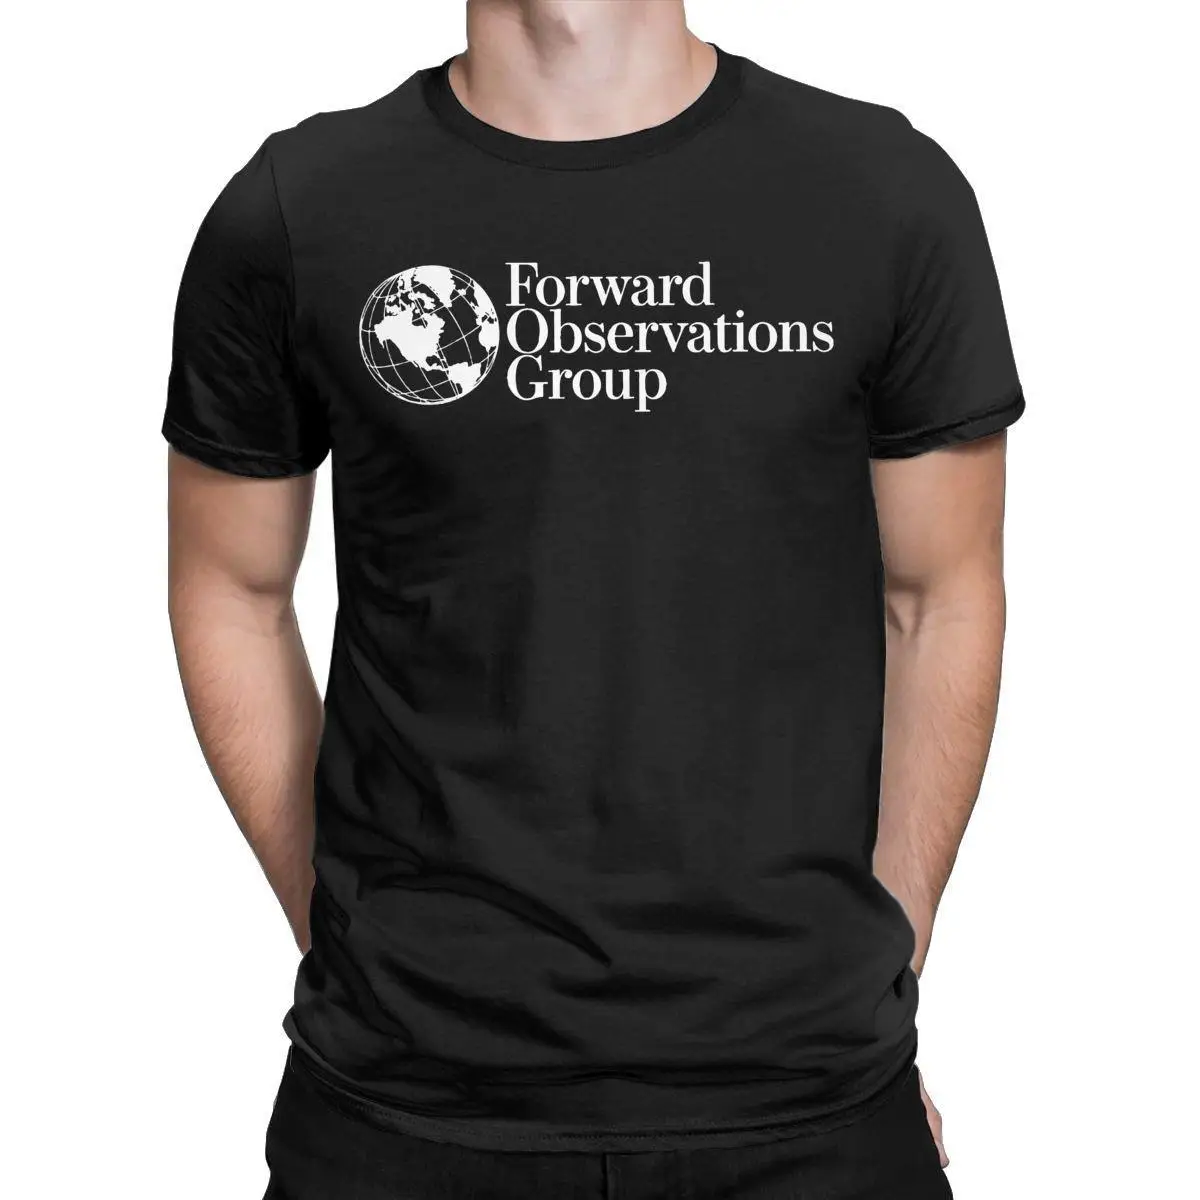 FOG T Shirts Men 100% Cotton Vintage T-Shirt Crew Neck Forward Observations Group Gbrs Tee Shirt Short Sleeve Clothes Original